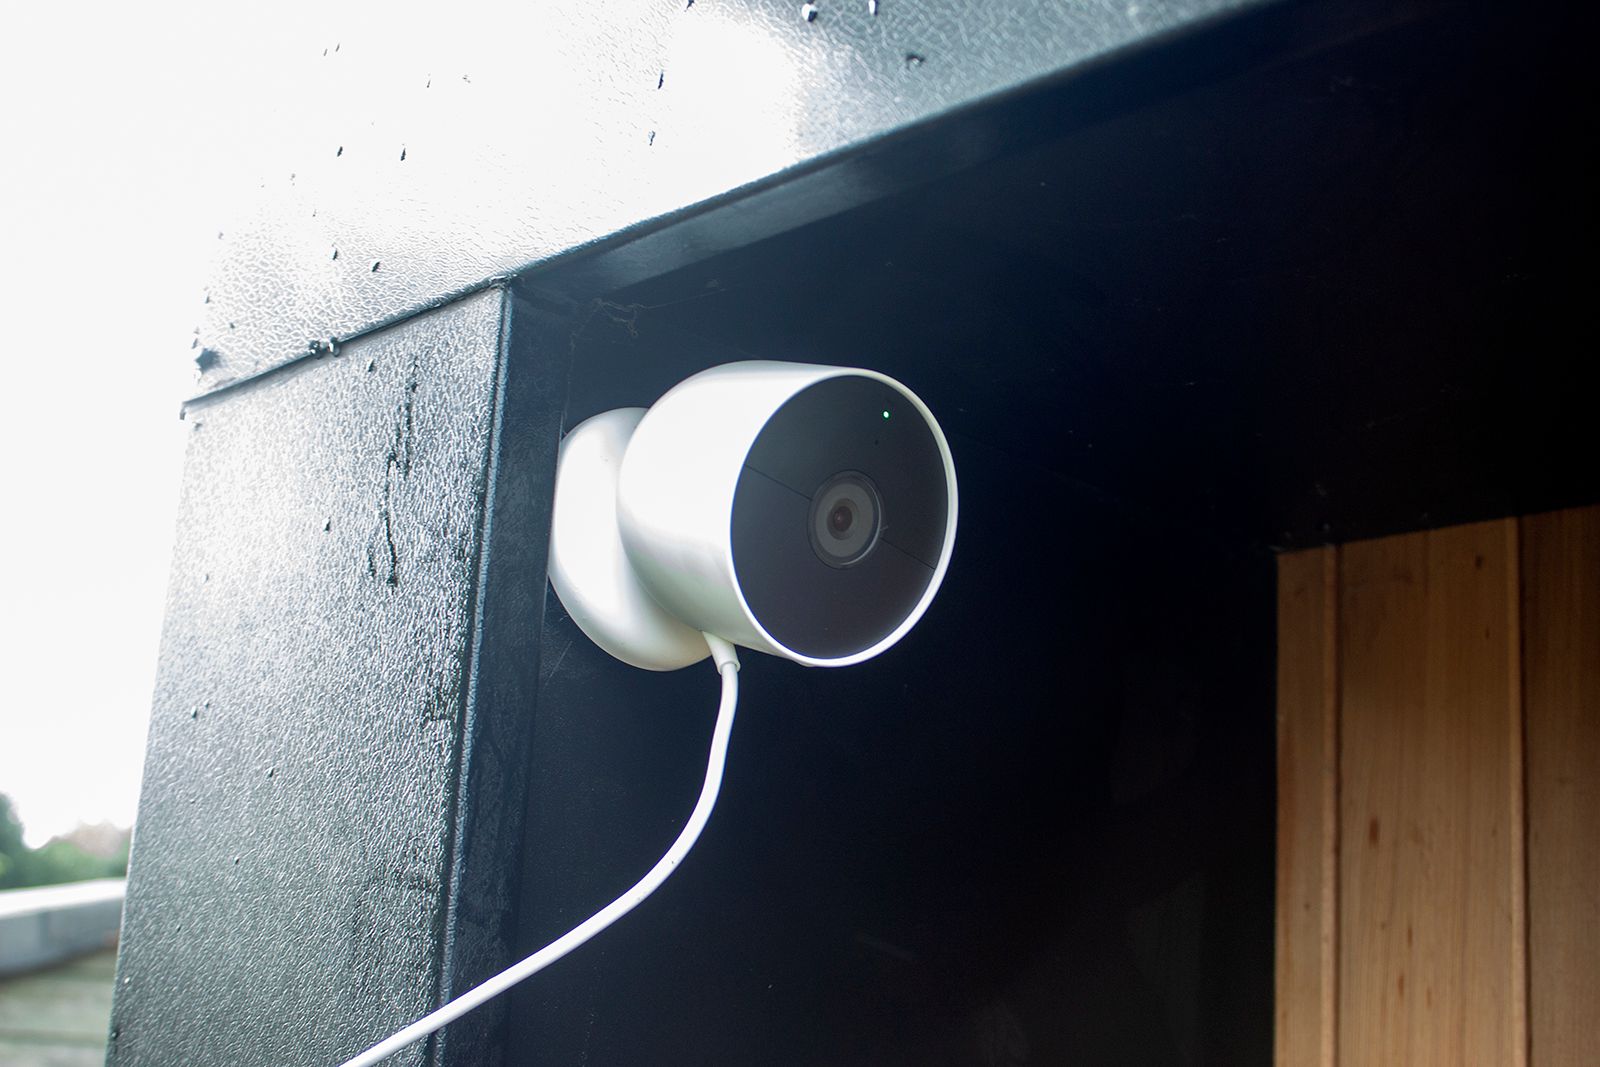 Google Nest Cam (Outdoor or Indoor, Battery) review photo 5